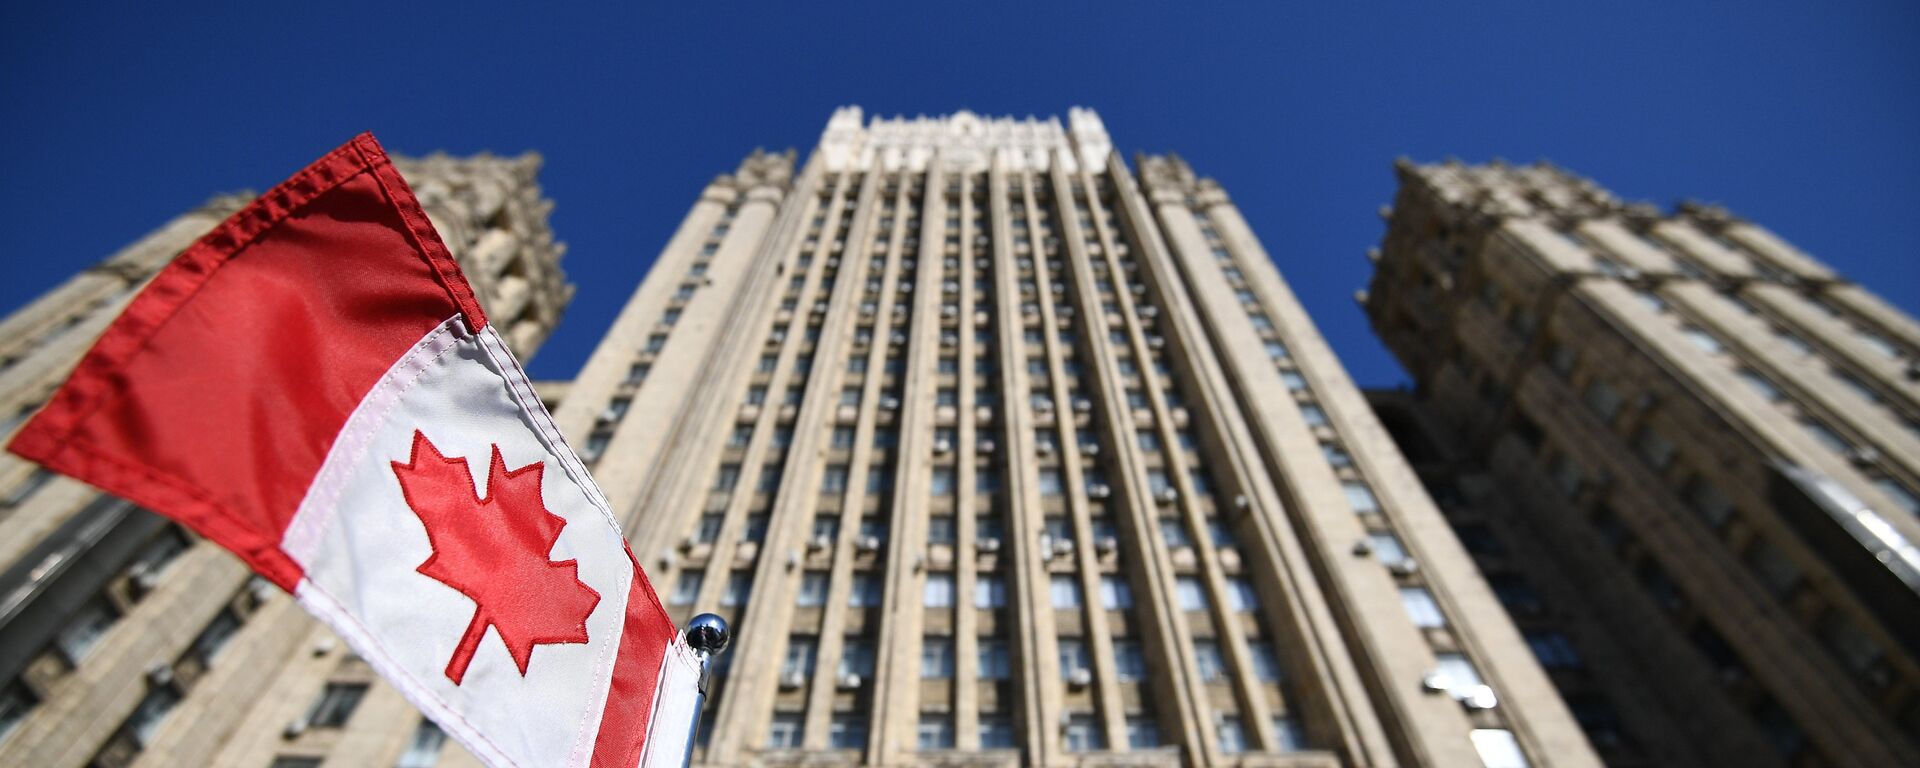 Bandera de Canadá cerca del Ministerio de Asuntos Exteriores de Rusia - Sputnik Mundo, 1920, 25.03.2021